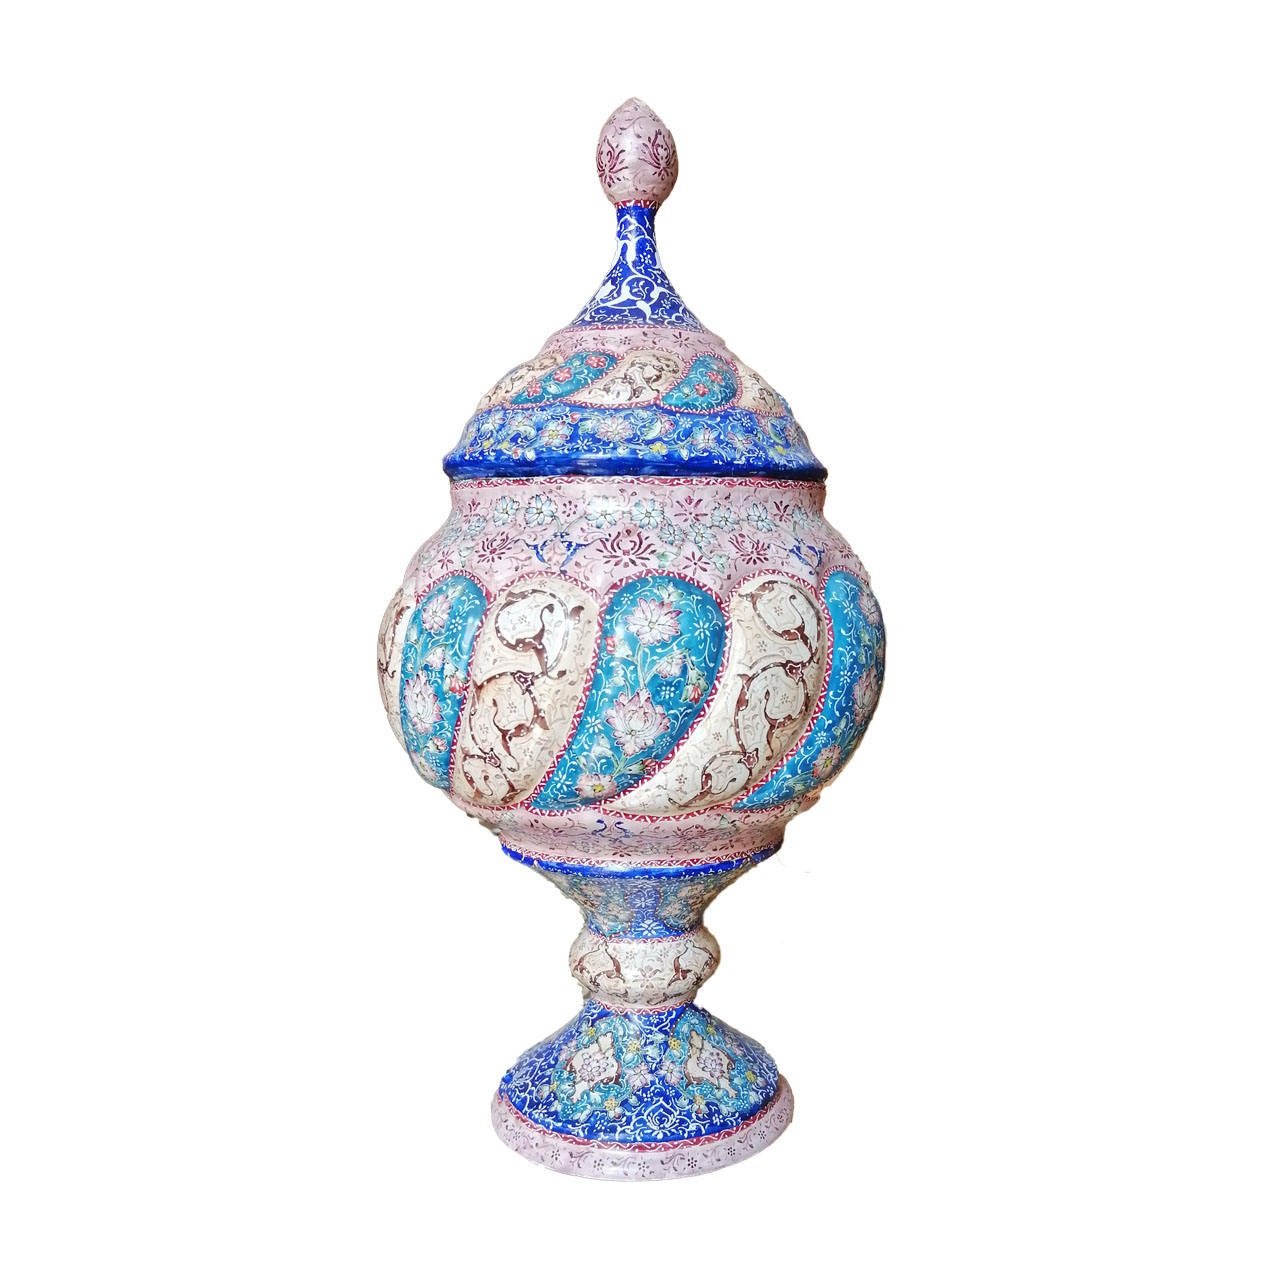 Enamel Handicraft Copper pot and container design Naghsh Aseman, व्यंजन, सजावट प्लेट, सजावट के बर्तन, सजावट के बर्तन, सजावट के बर्तन, सजावट की प्लेटें खरीदते हैं